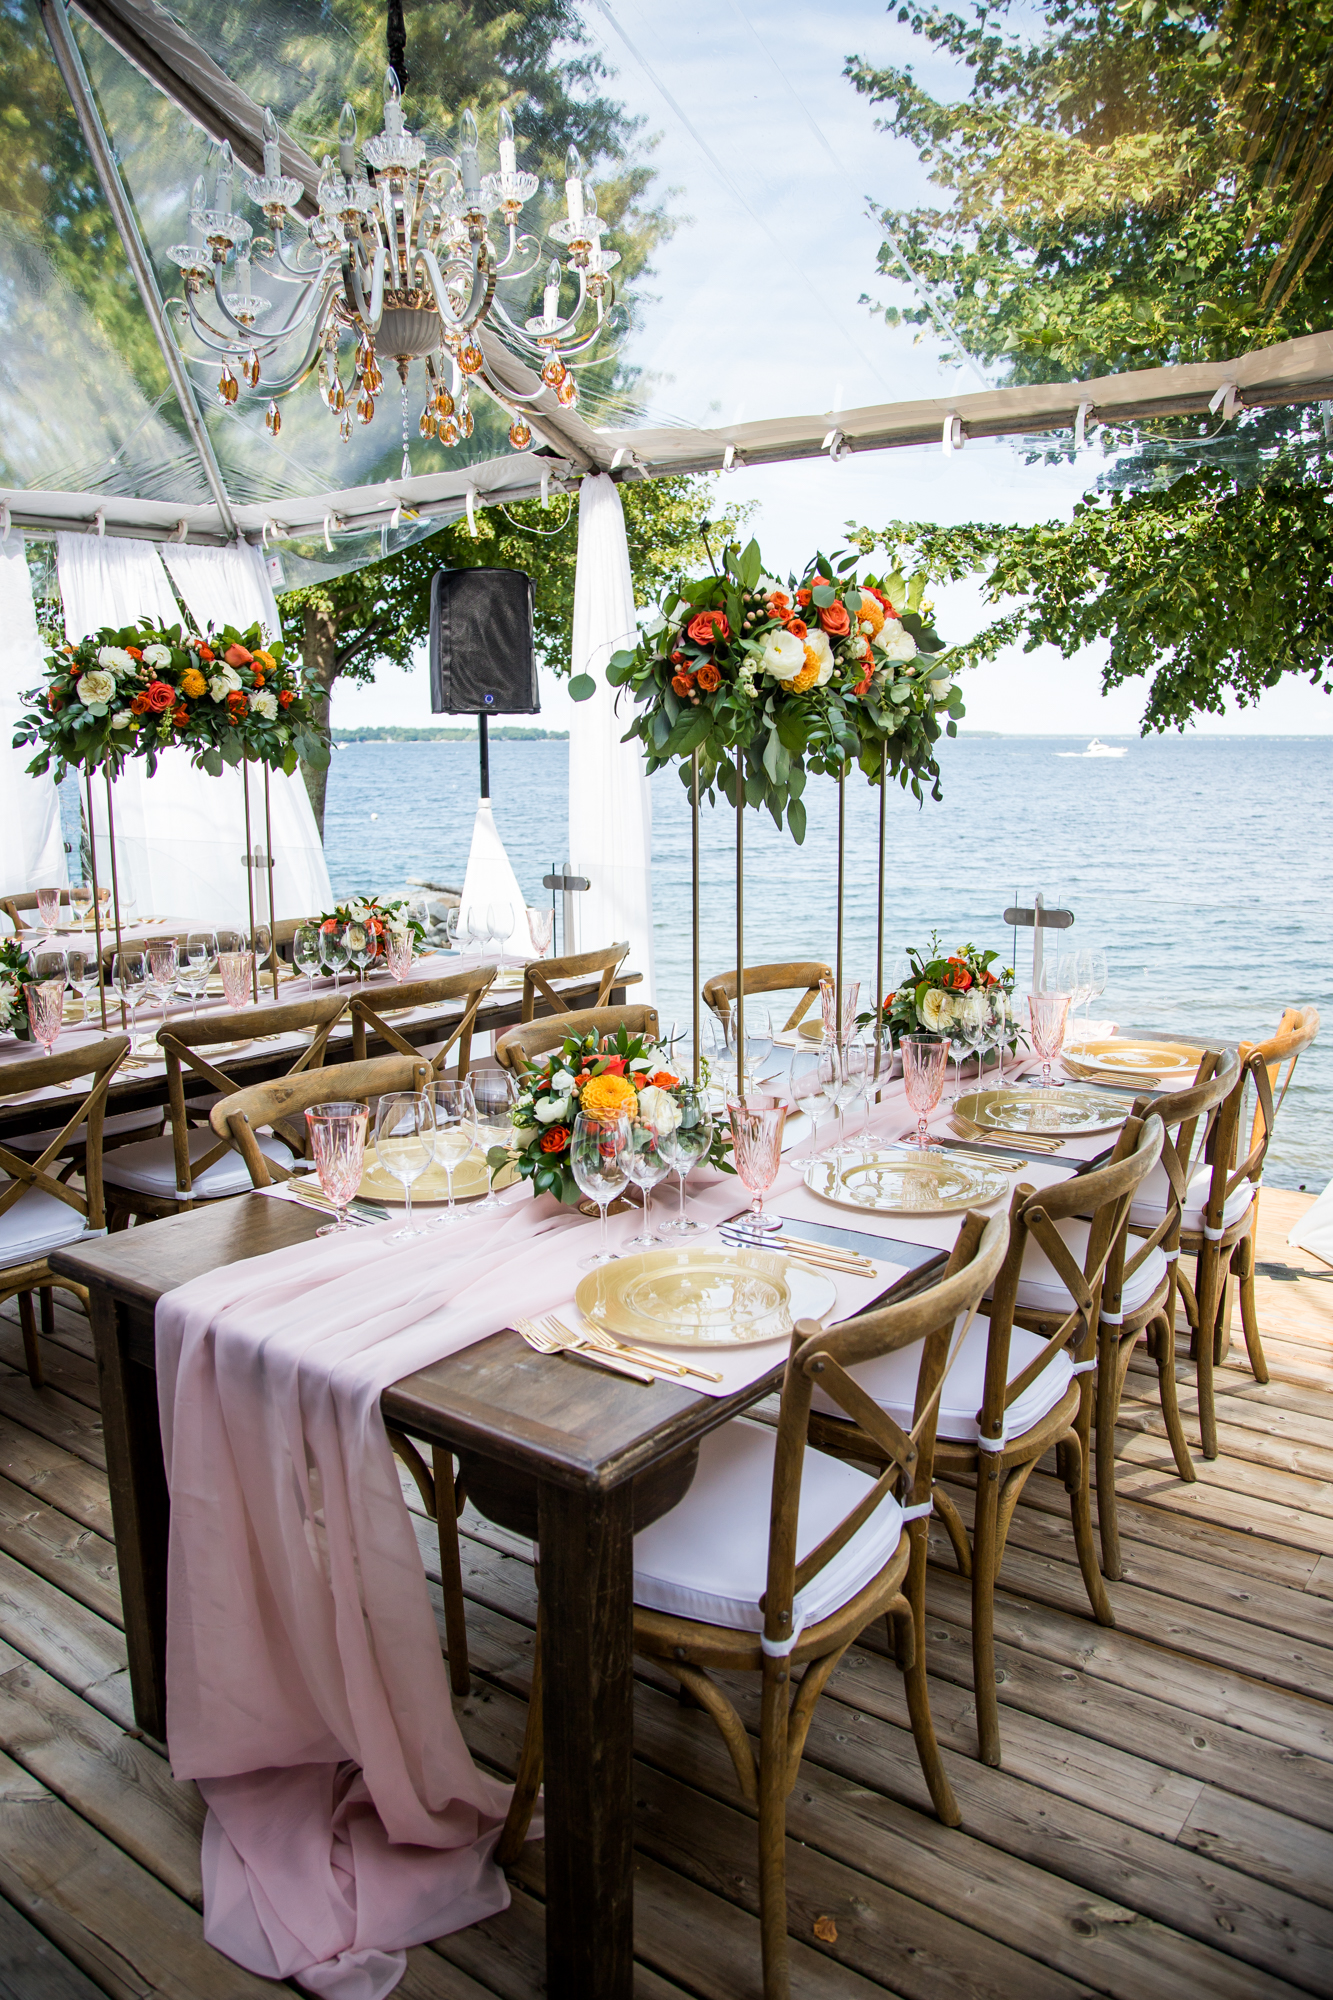 Wedding reception table and decor overlooking Georgian Bay